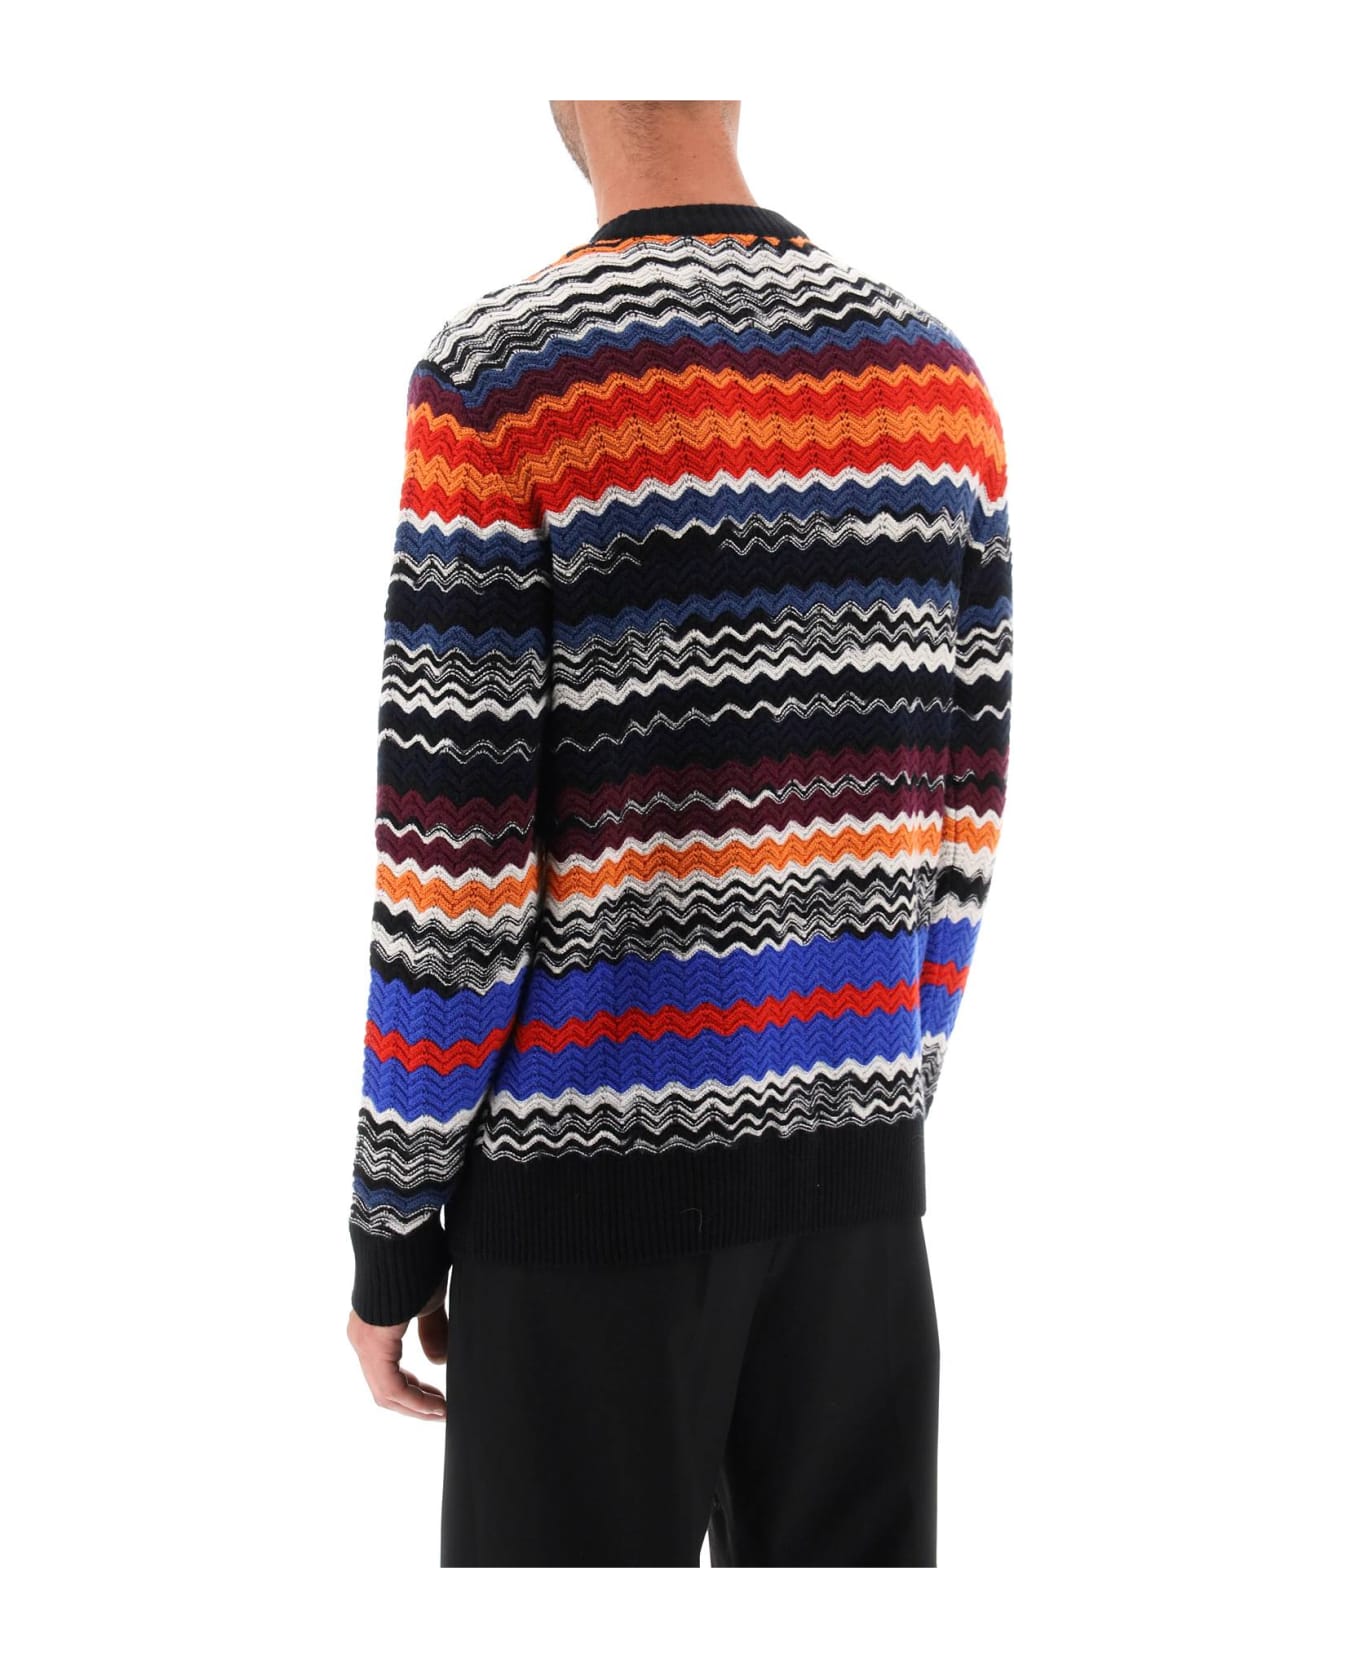 Missoni Crew-neck Sweater With Multicolor Herringbone Motif - Yb Orang/blk/red/blu/wh